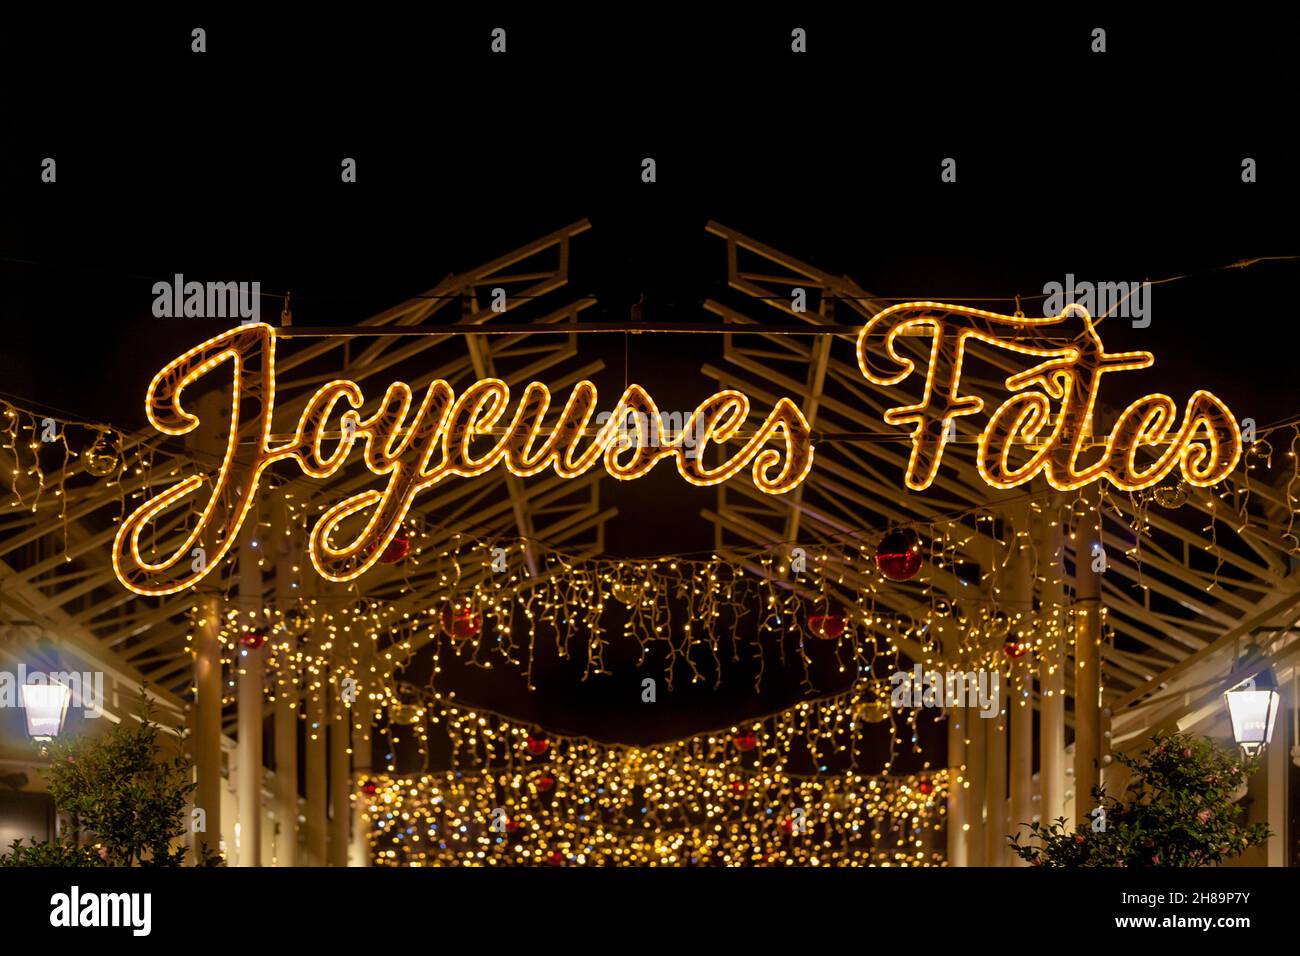 Christmas illuminations saying in French - Joyeuses Fetes - meaning in English - Happy Holidays -. Stock Photo